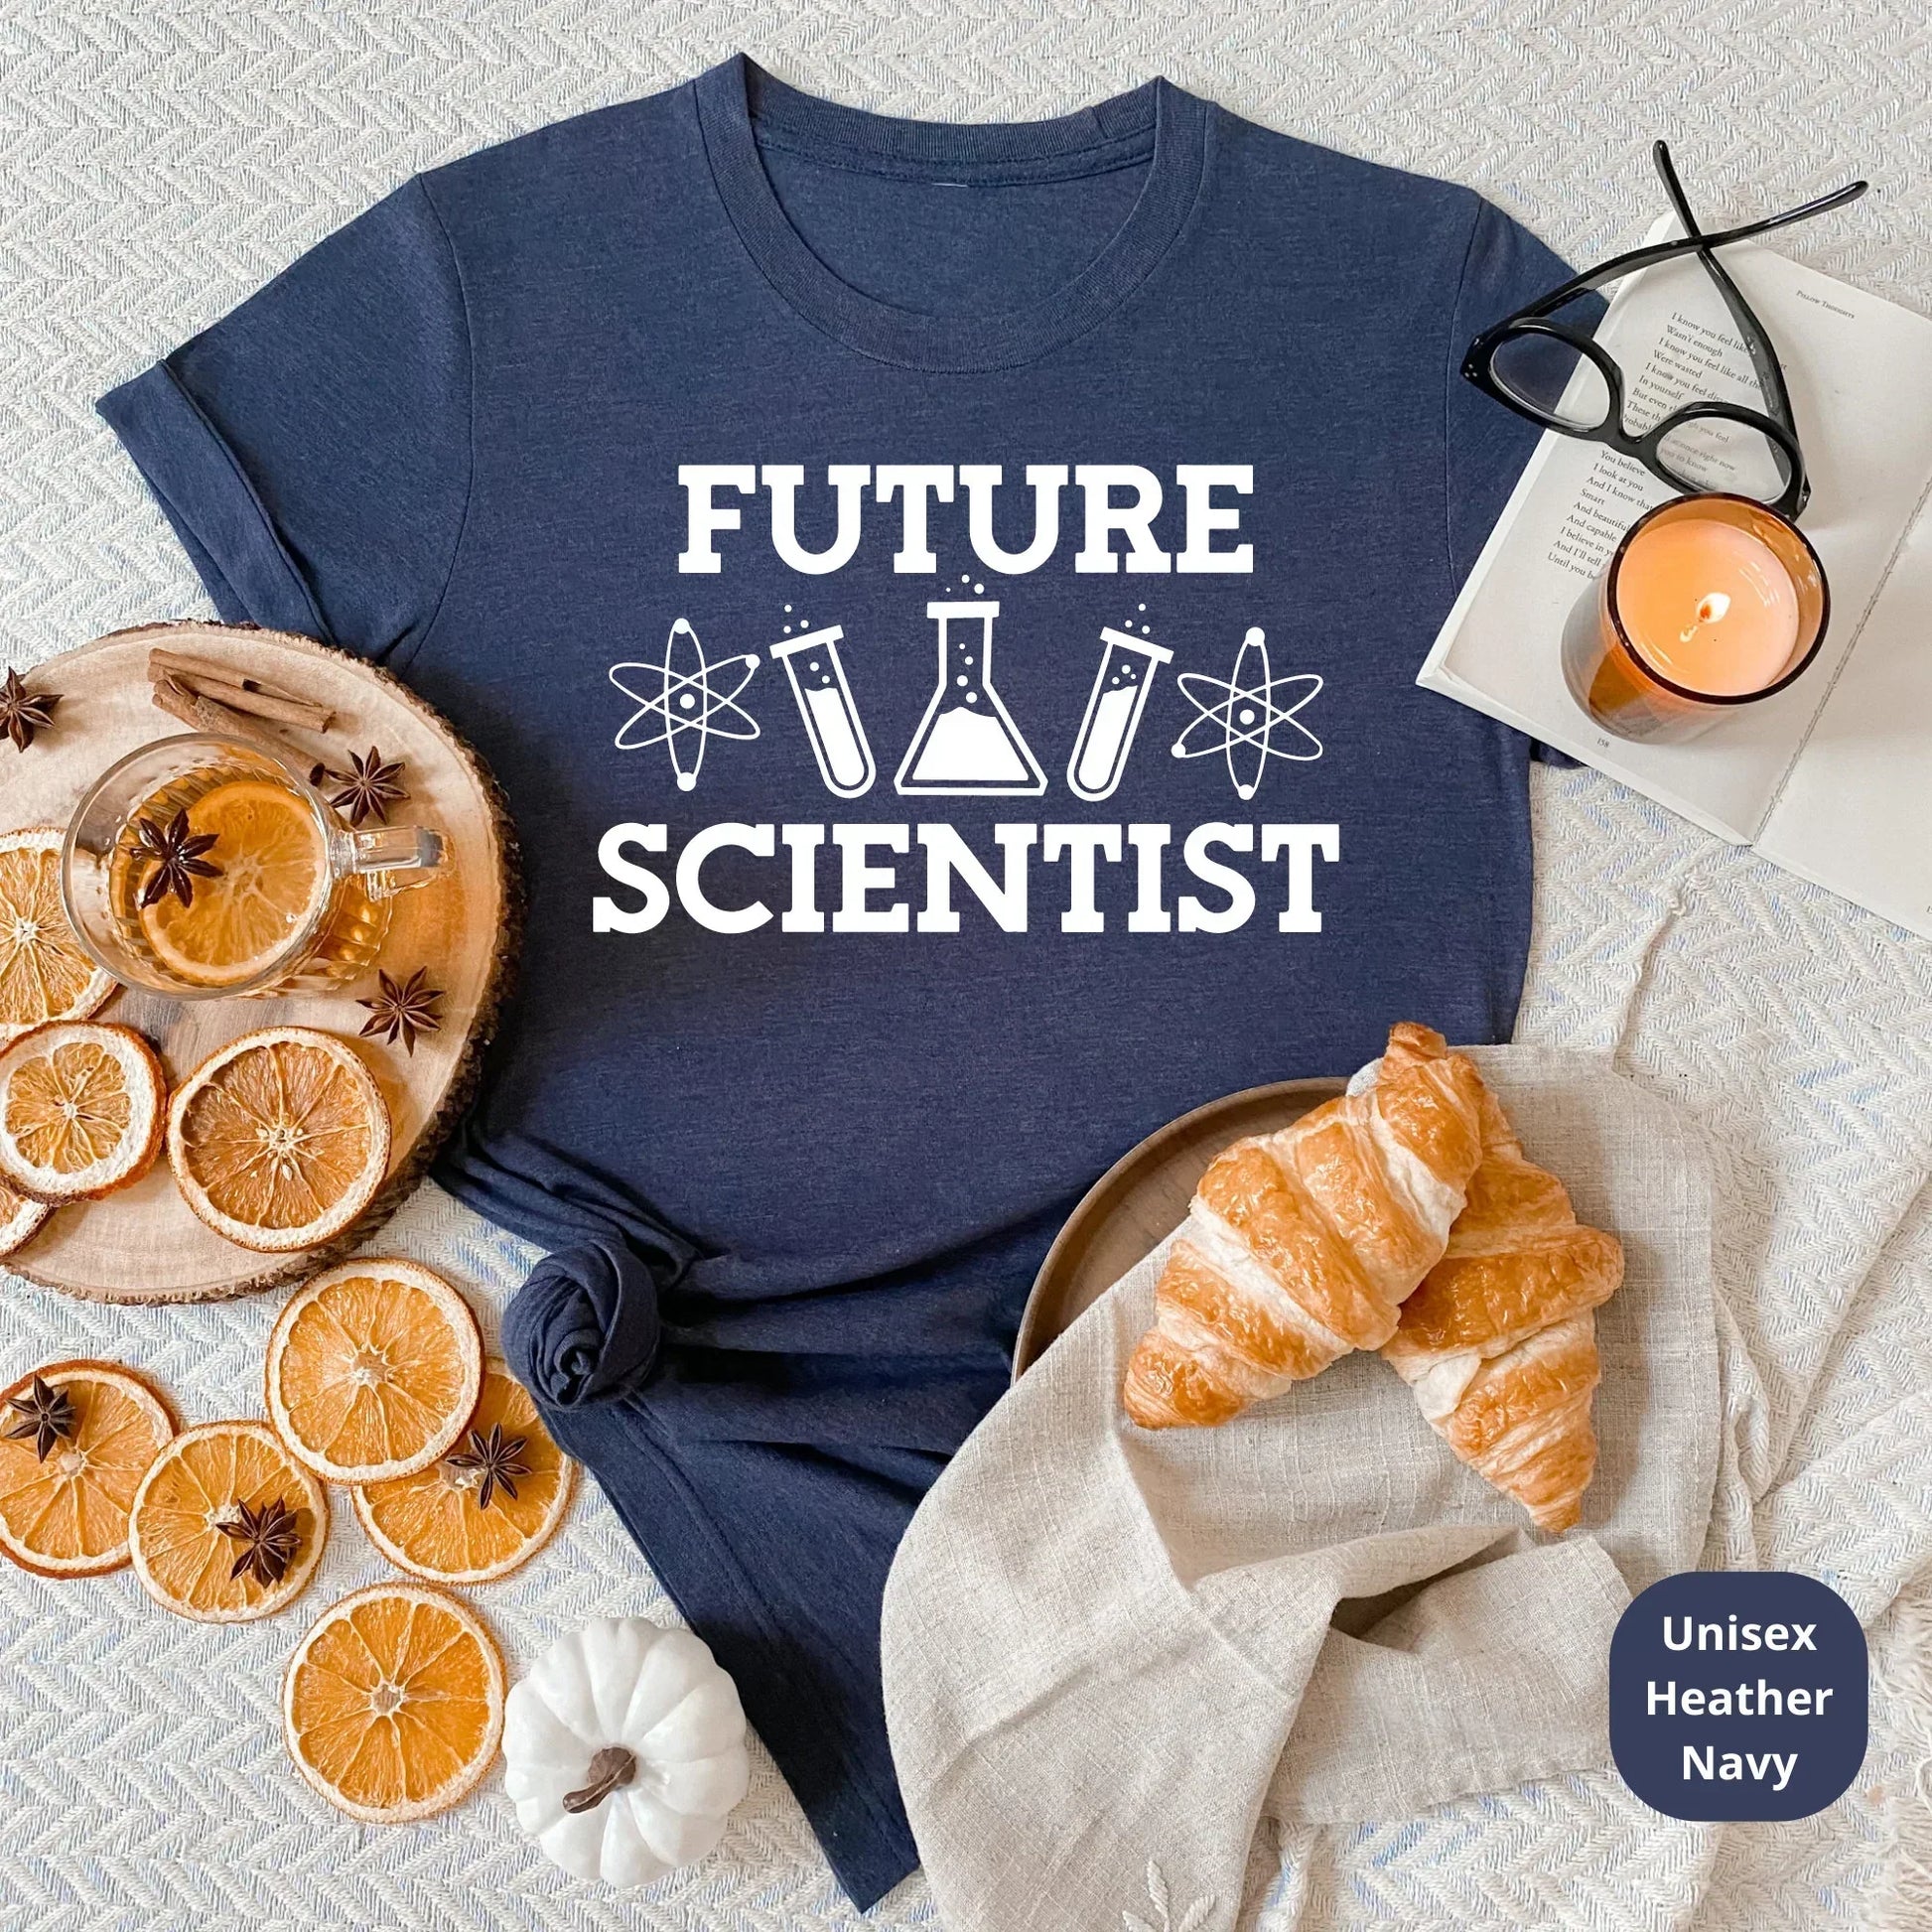 Future Scientist Shirt, Science Teacher Gift, Grad Student T-Shirt, Graduation Party Gift for Professor, Elements Sweatshirt, Chemistry Tee HMDesignStudioUS